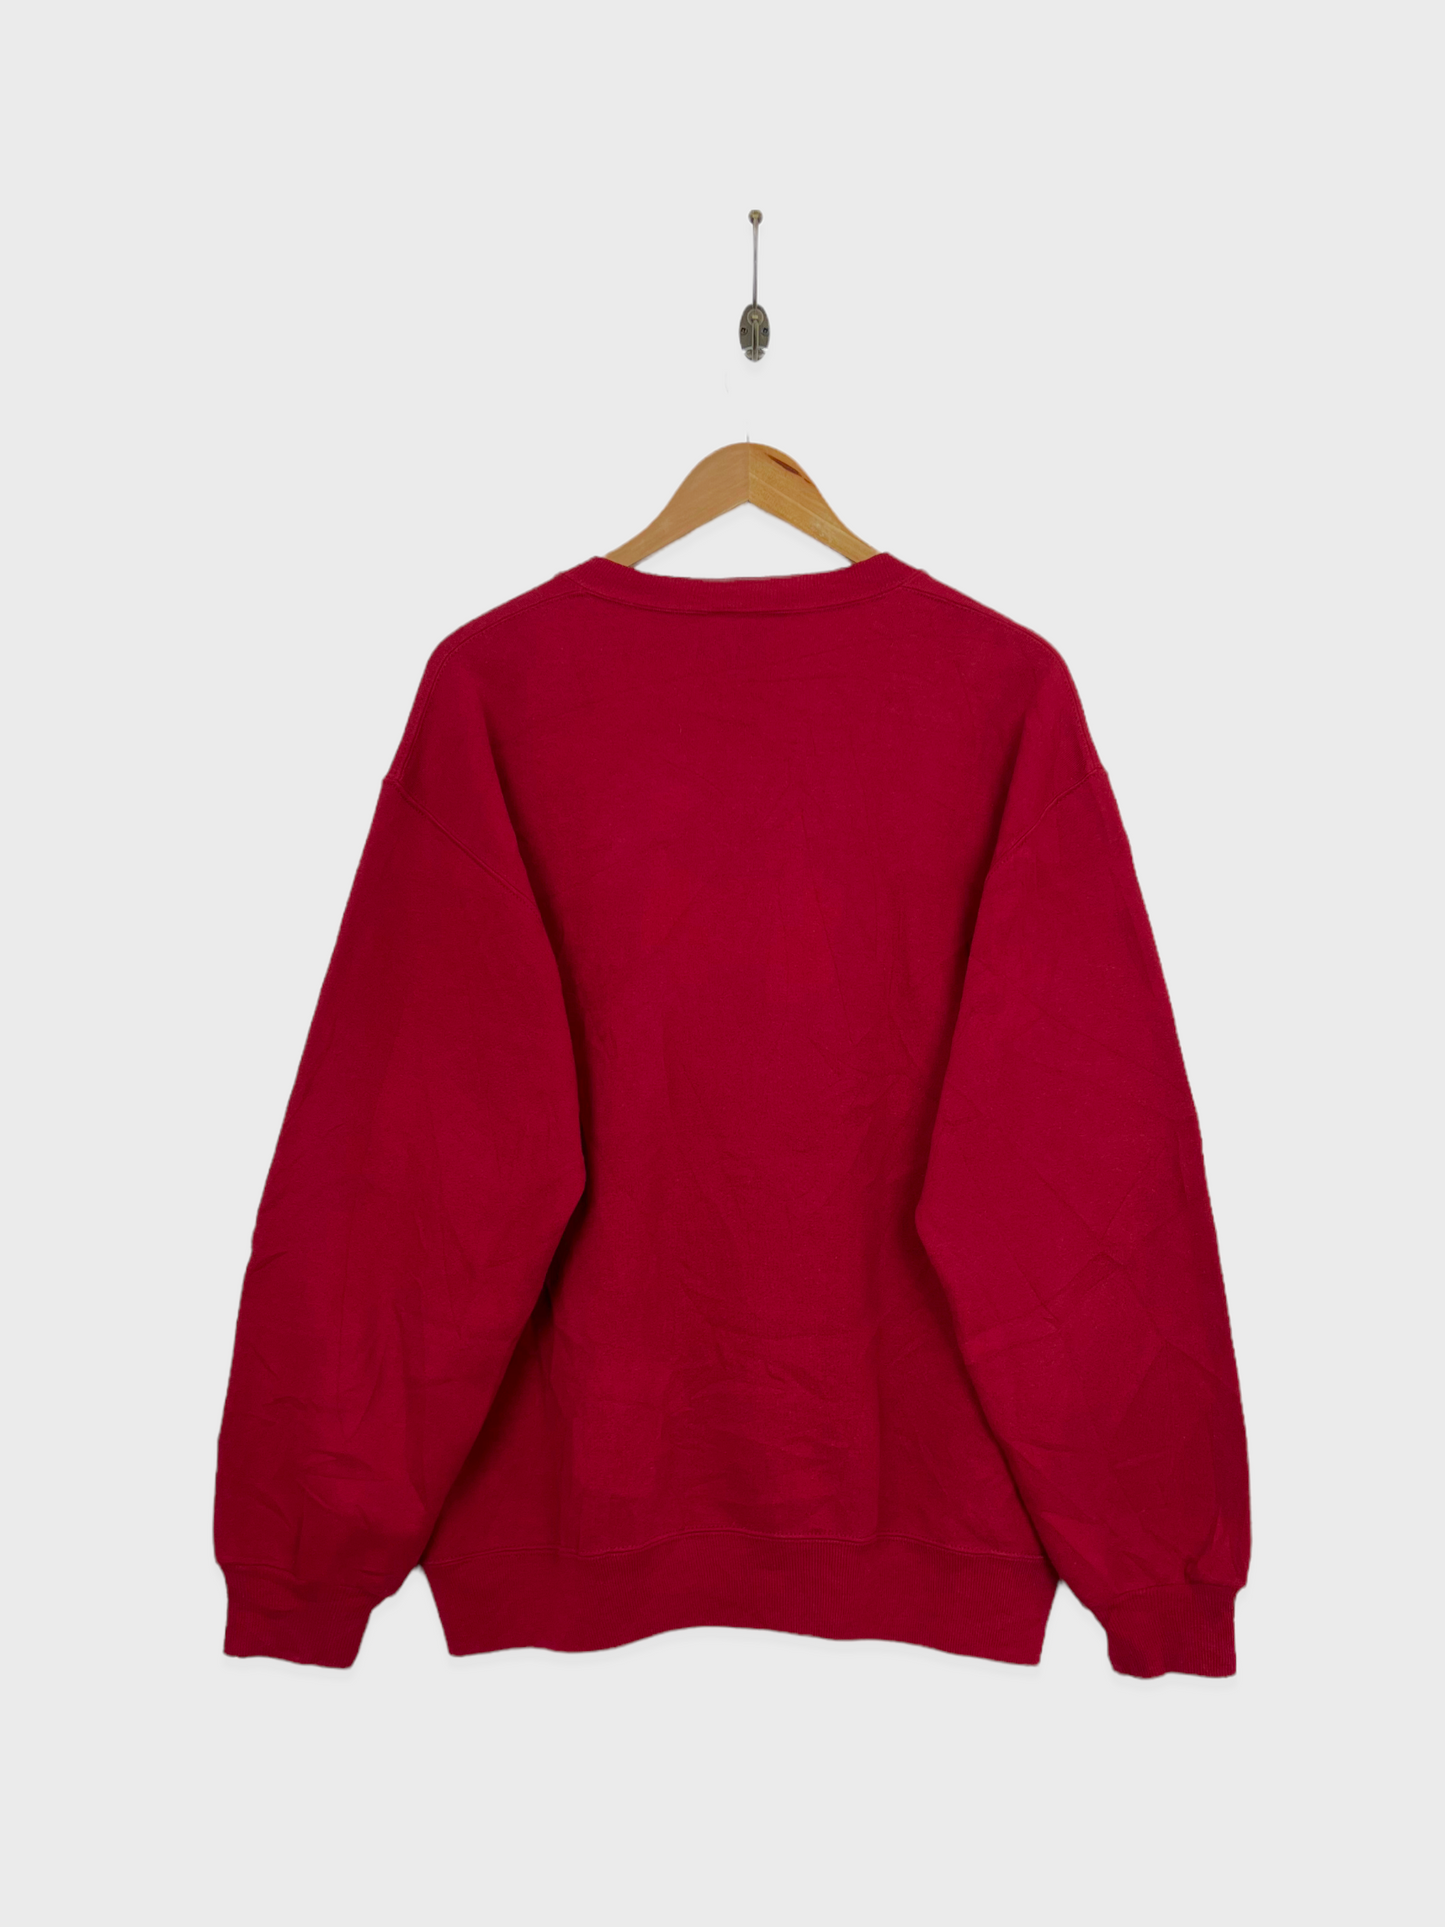 90's Washington Redskins NFL USA Made Vintage Sweatshirt Size M-L